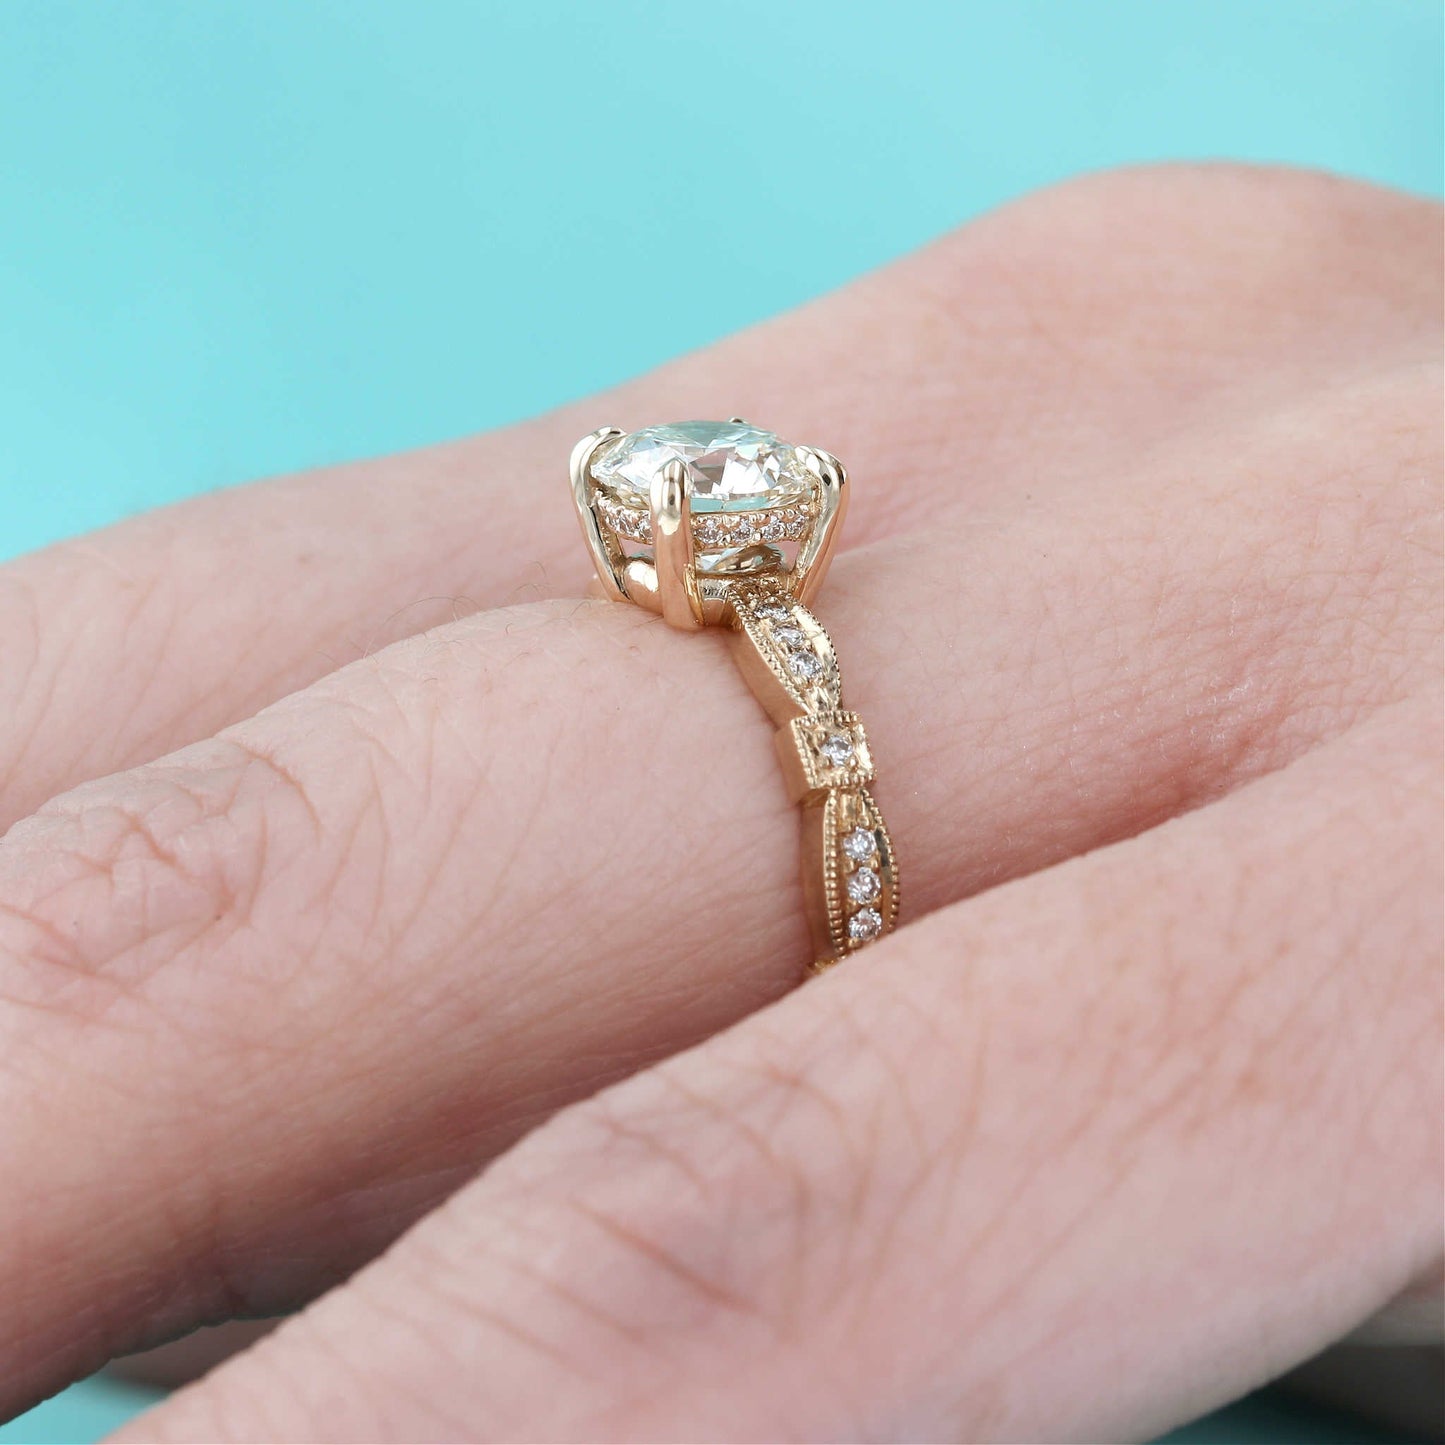 Vintage Hidden Halo Diamond Engagement Ring on a Finger